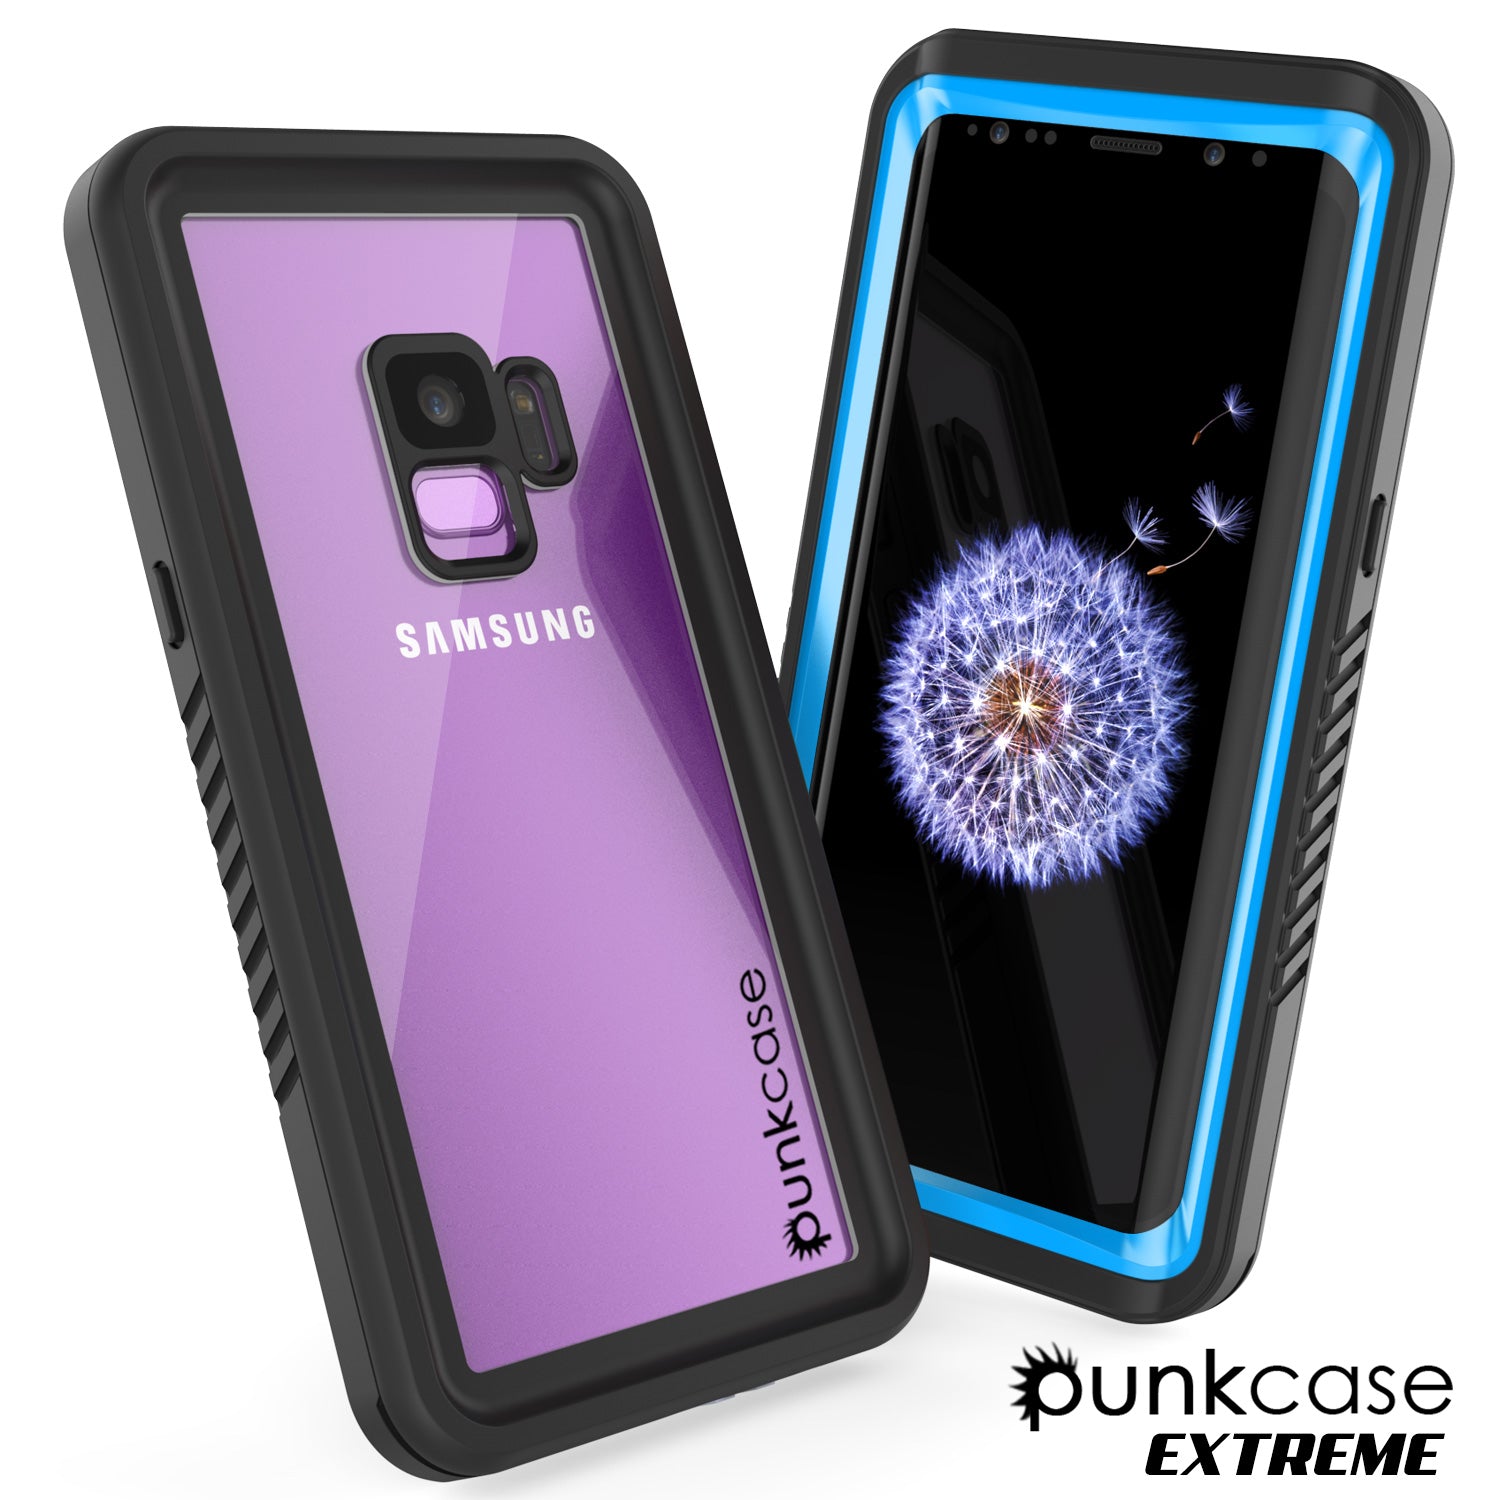 Punkcase Galaxy S9 Extreme Series Waterproof Body | Light Blue